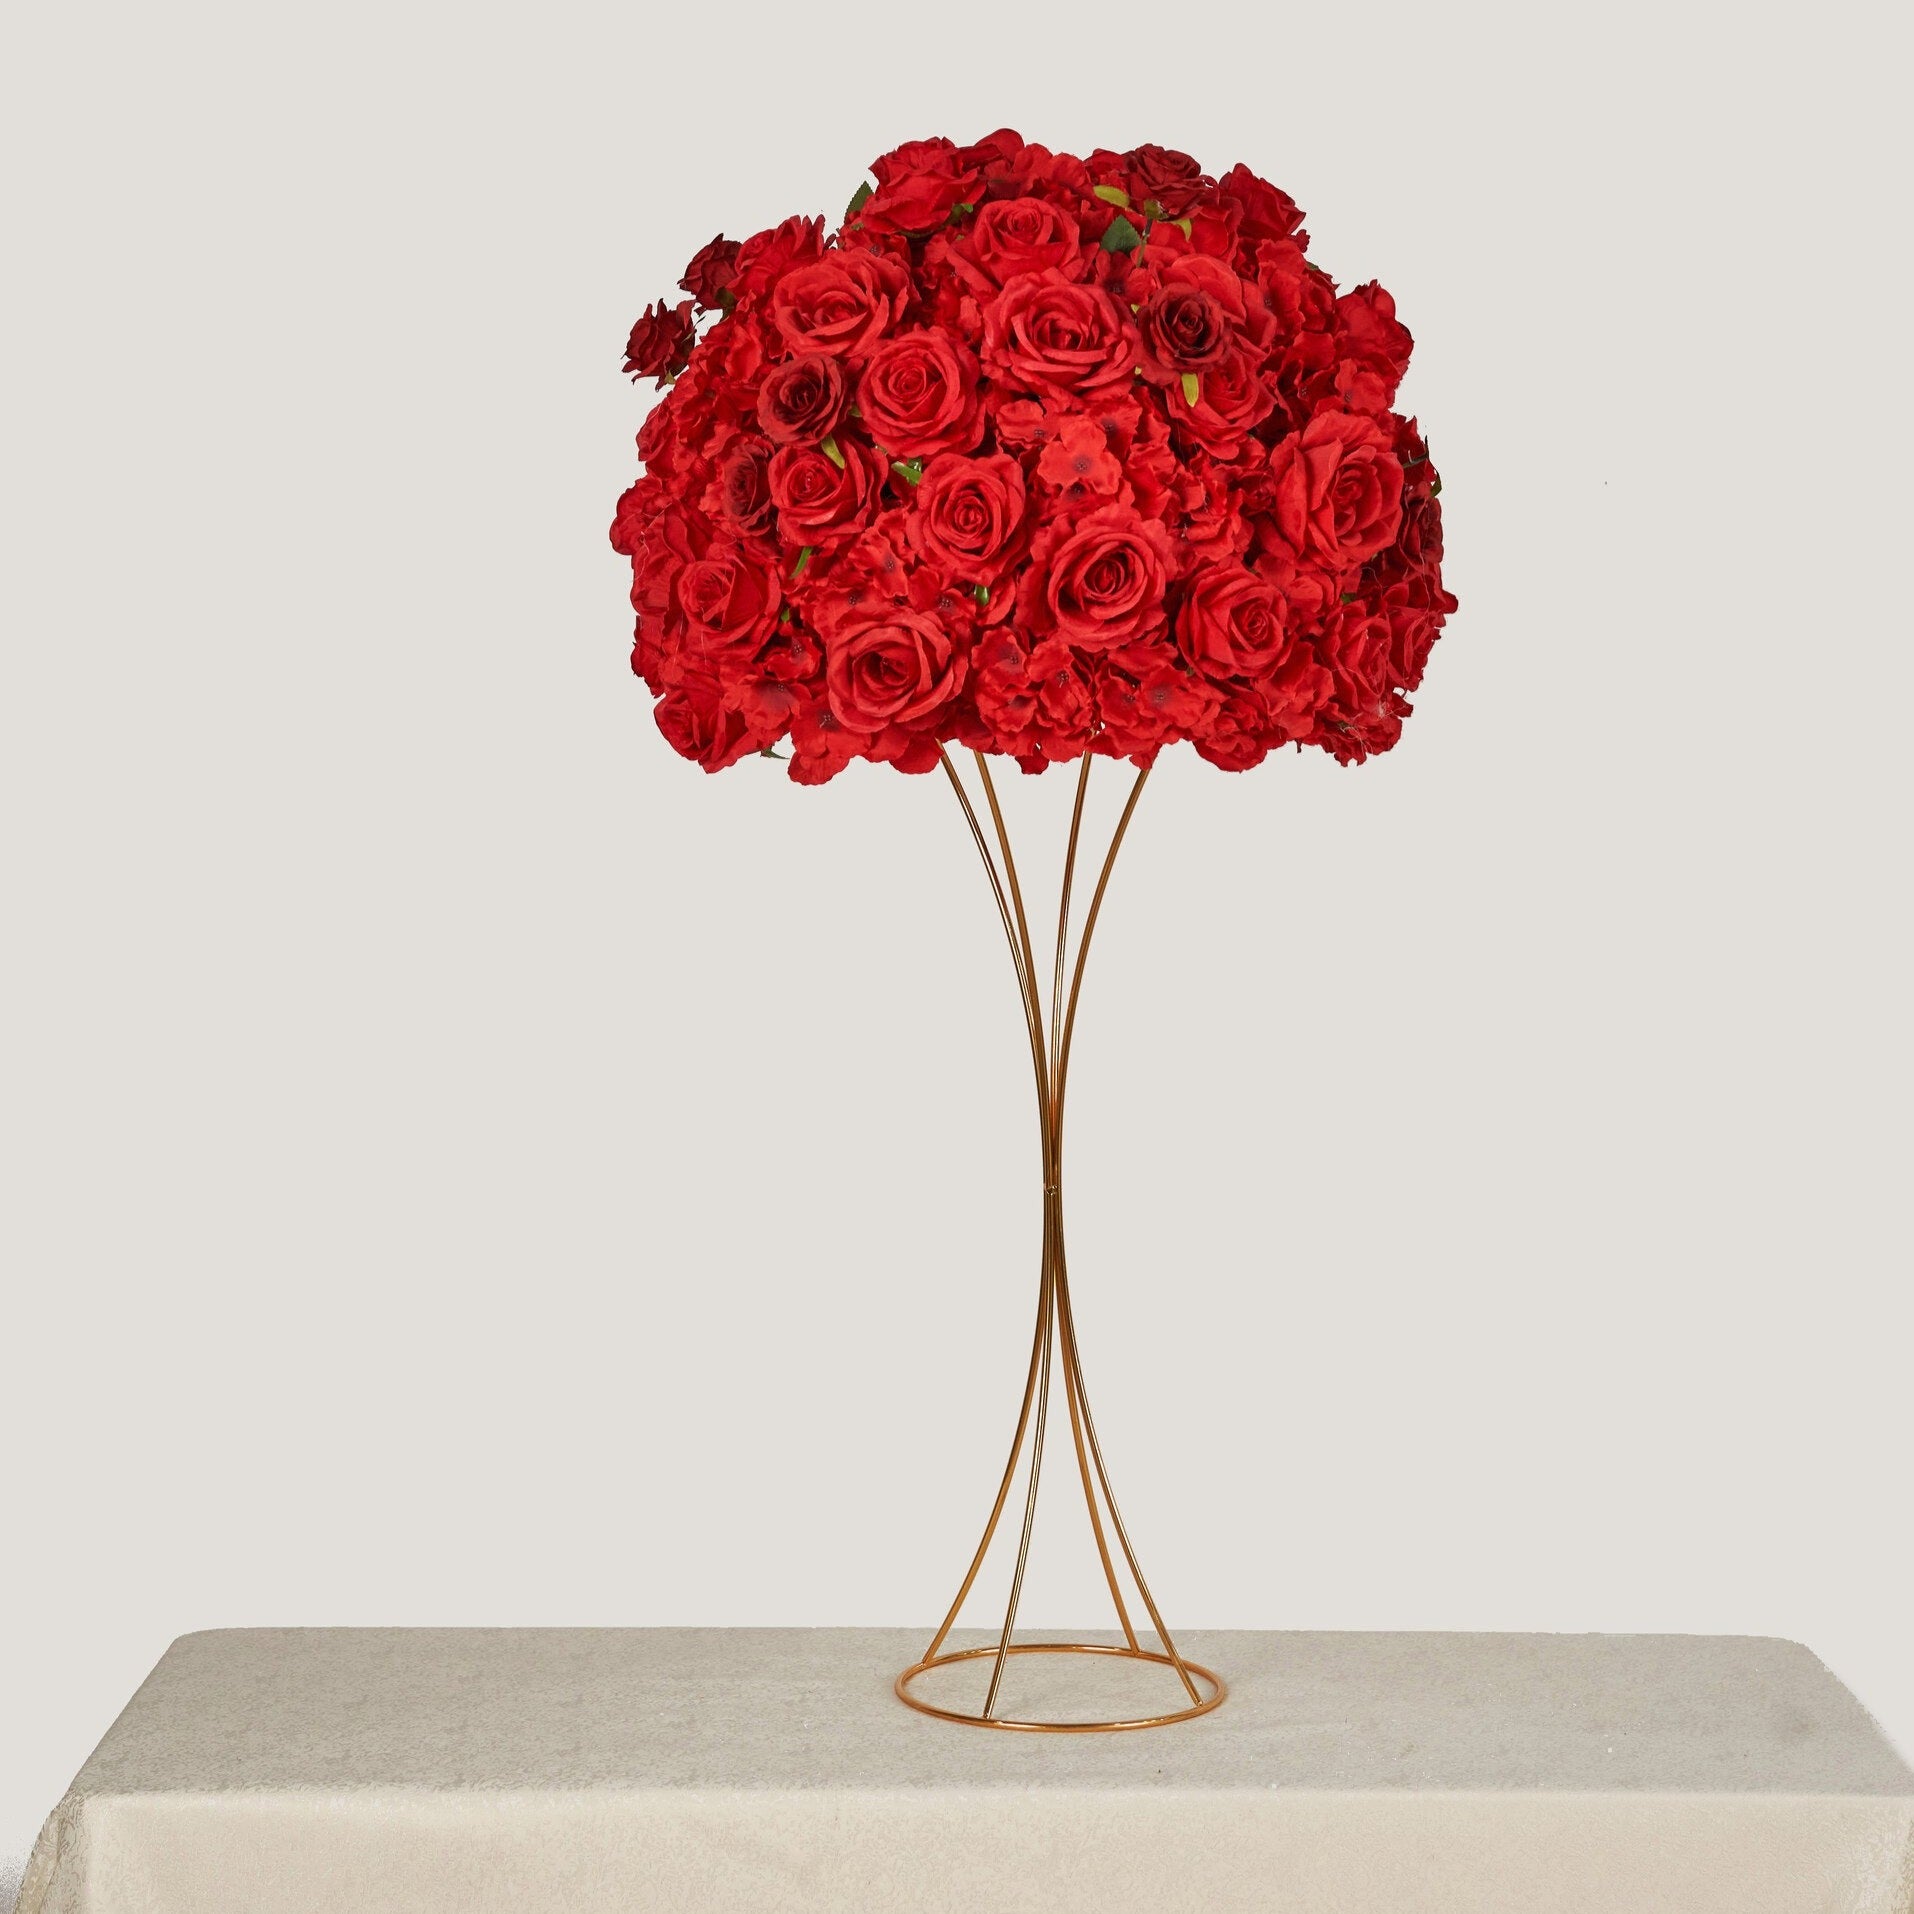 Flower Ball Dark Red Rose Wedding Proposal Party Centerpieces Decor